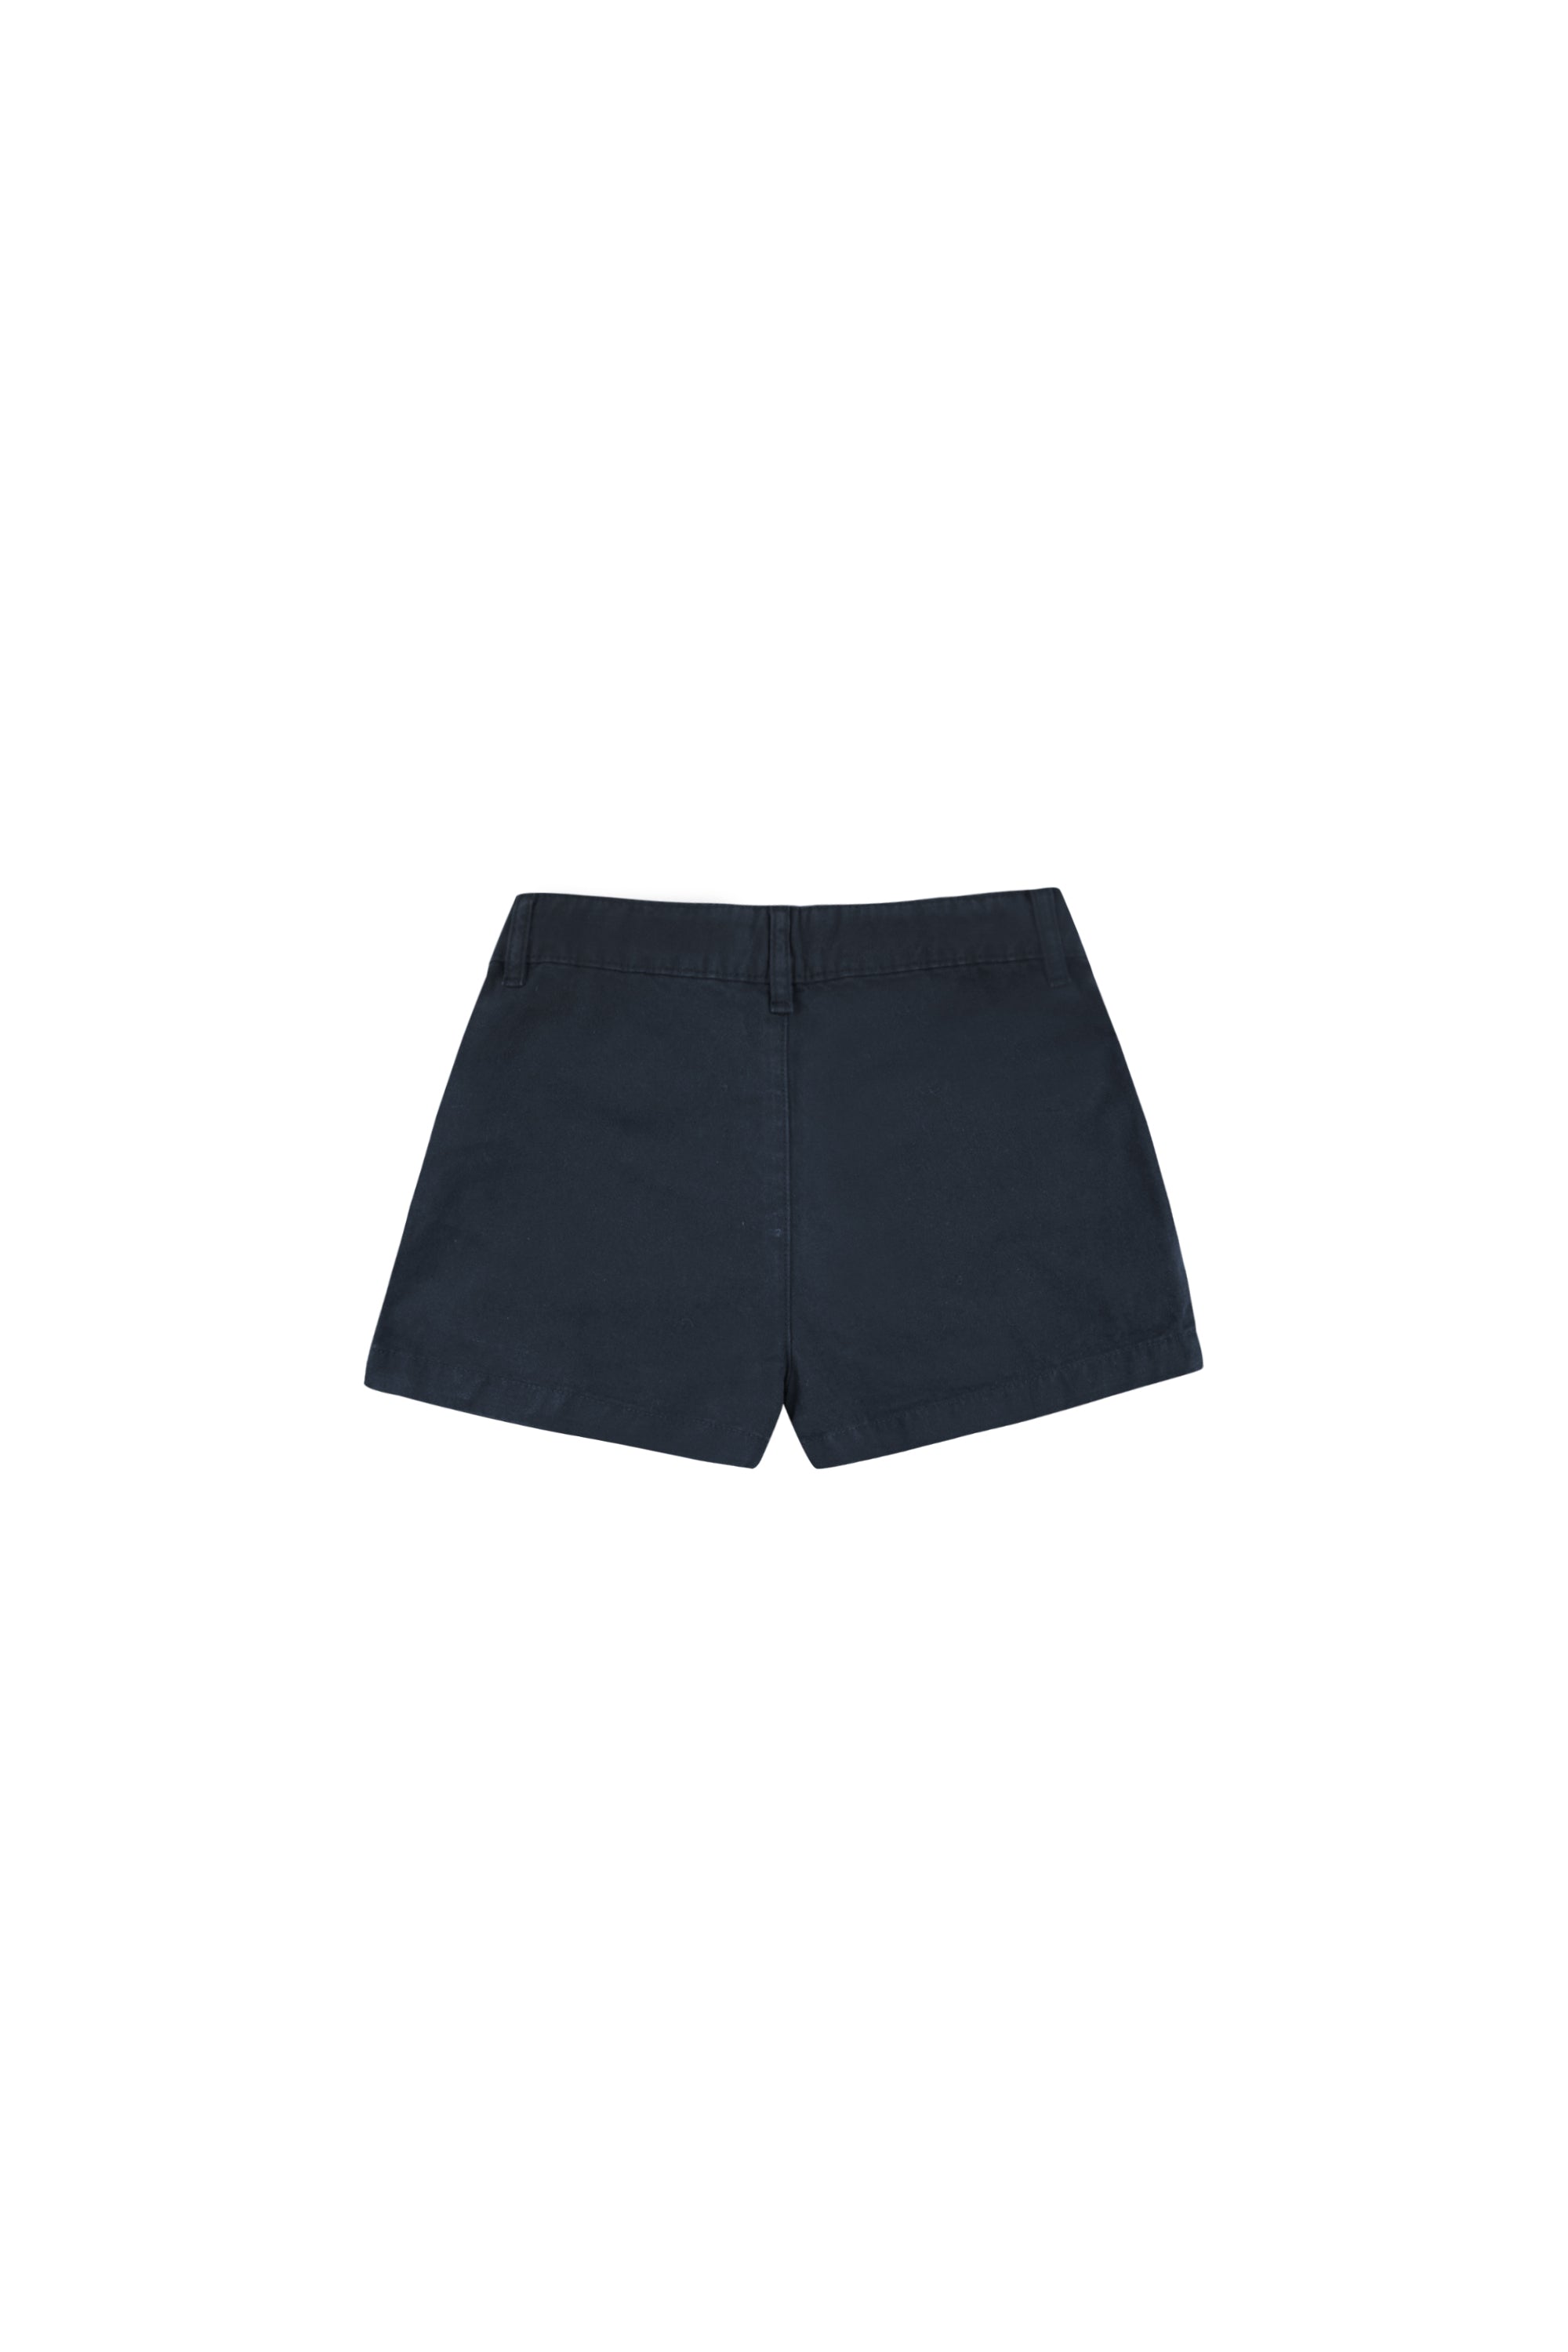 Tiny Cottons Block Party Pleat Shorts - Navy